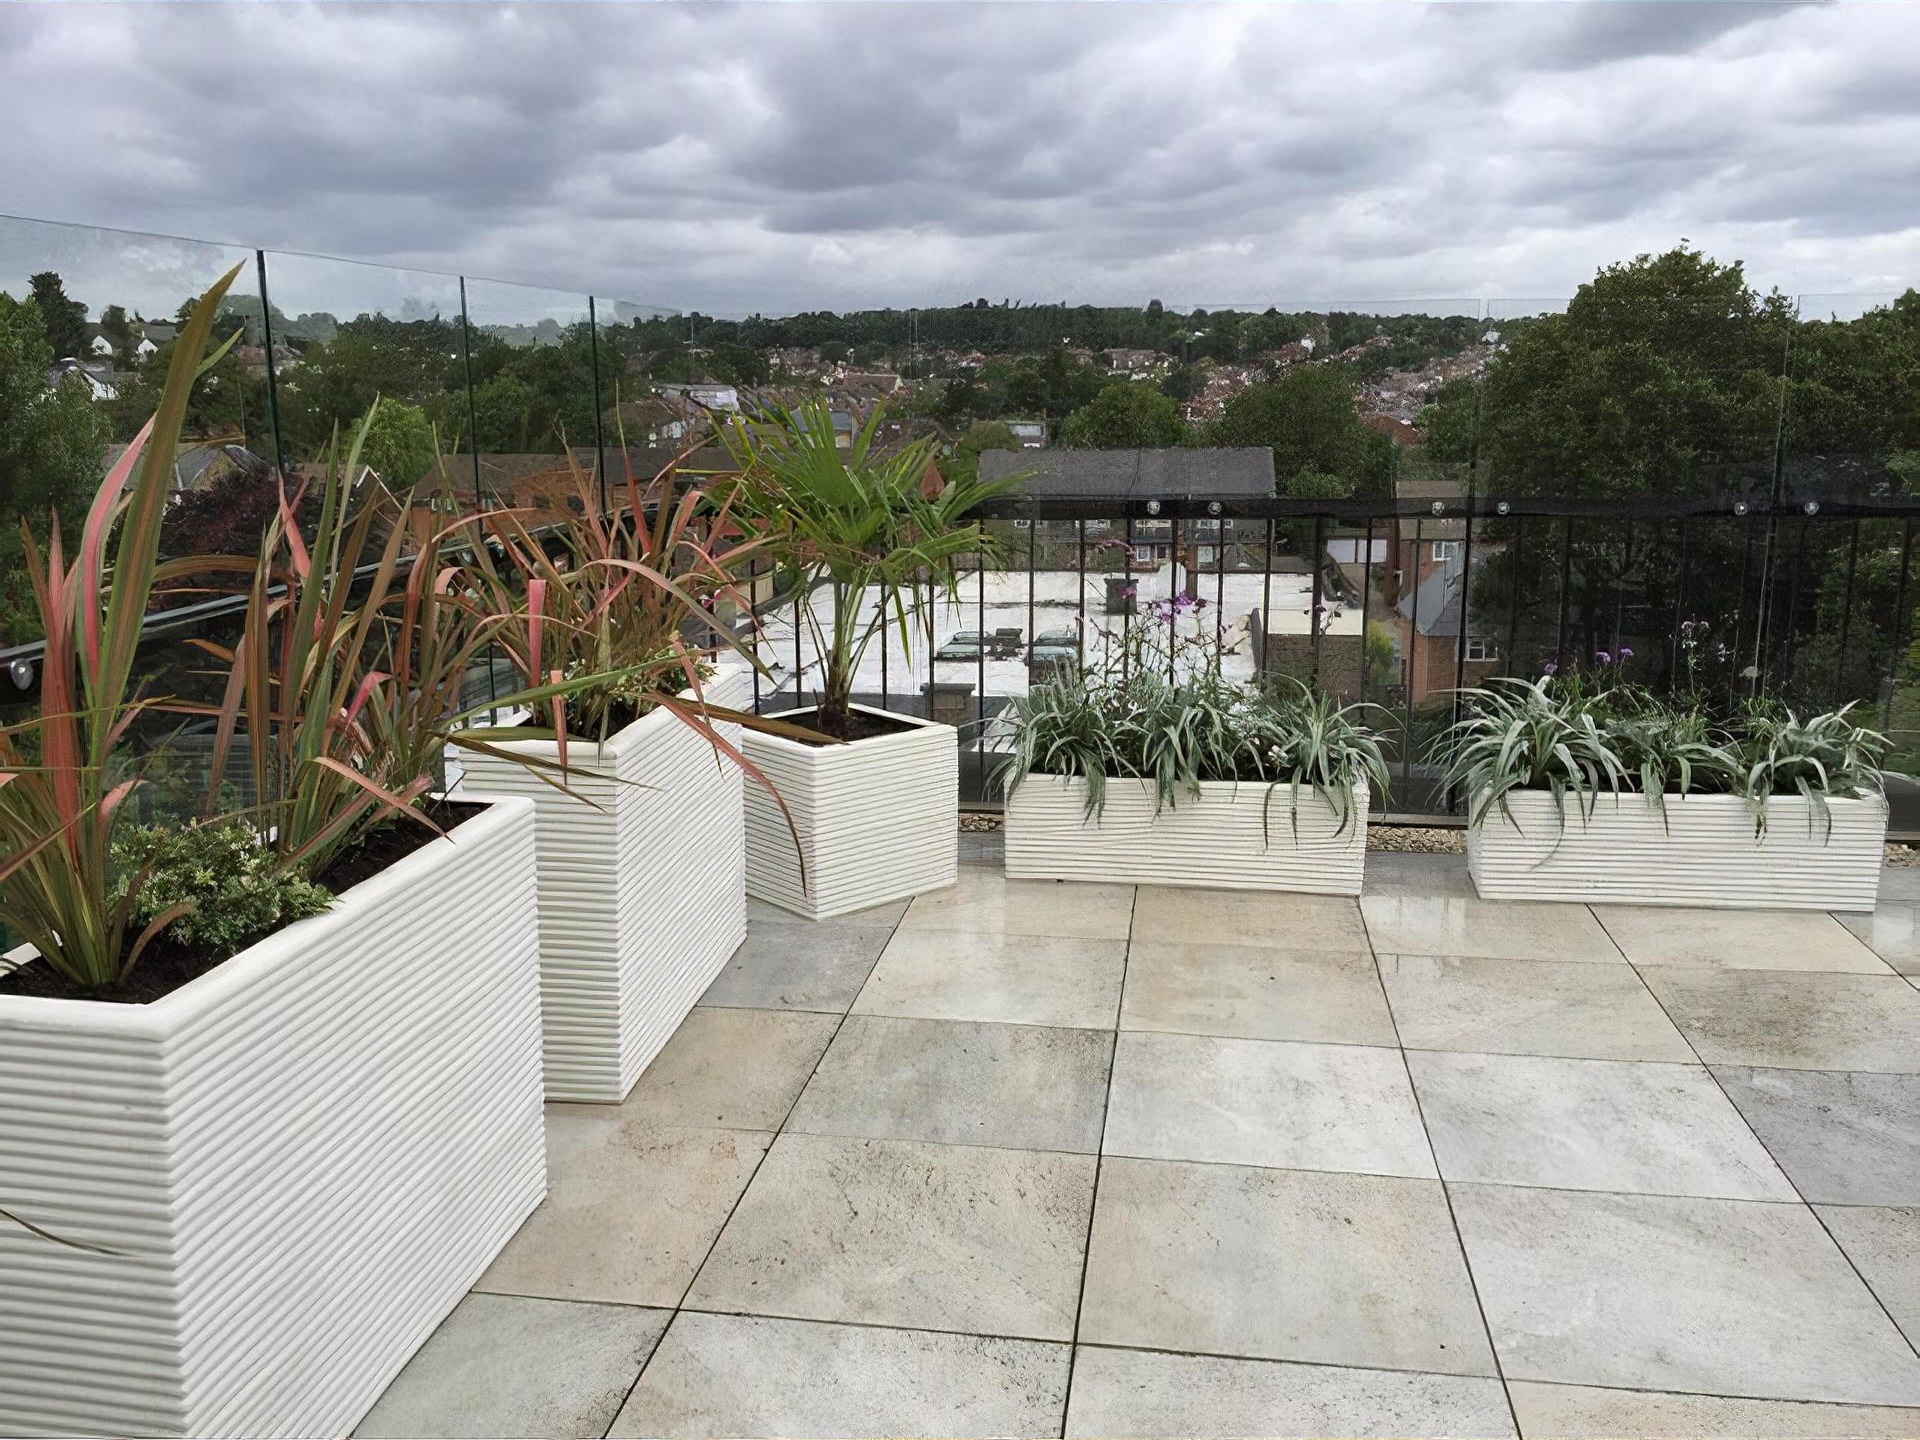 East Barnet Roof Terrace Garden Designed by Gillie Leaf Garden Design